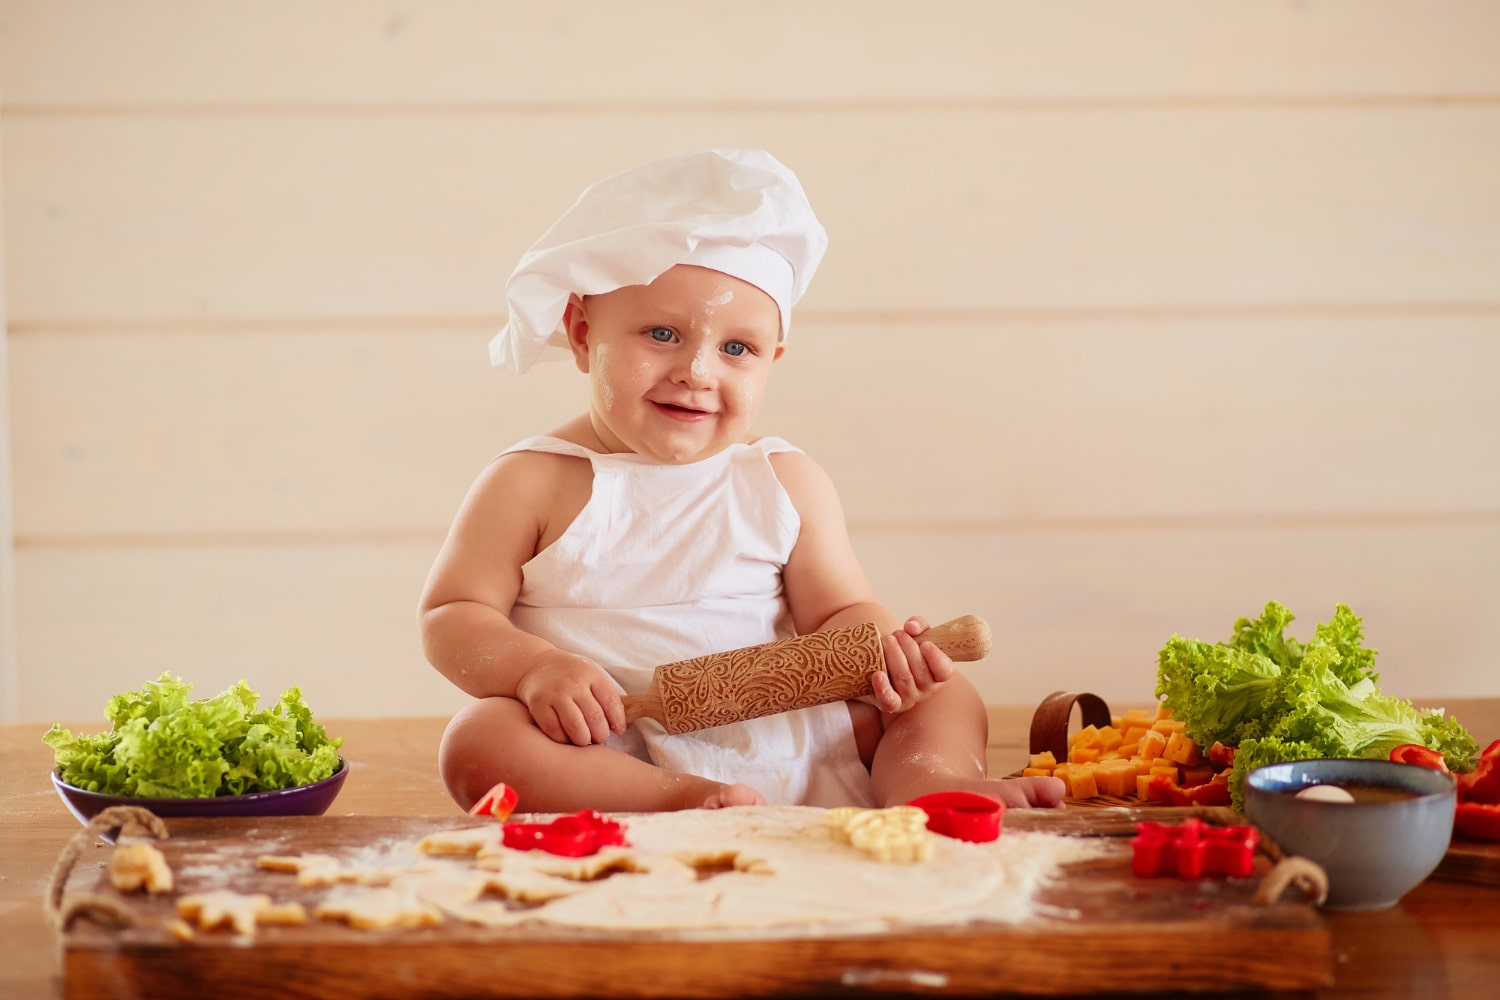 Cute little chef-themed newborn baby photoshoot capturing culinary cuteness